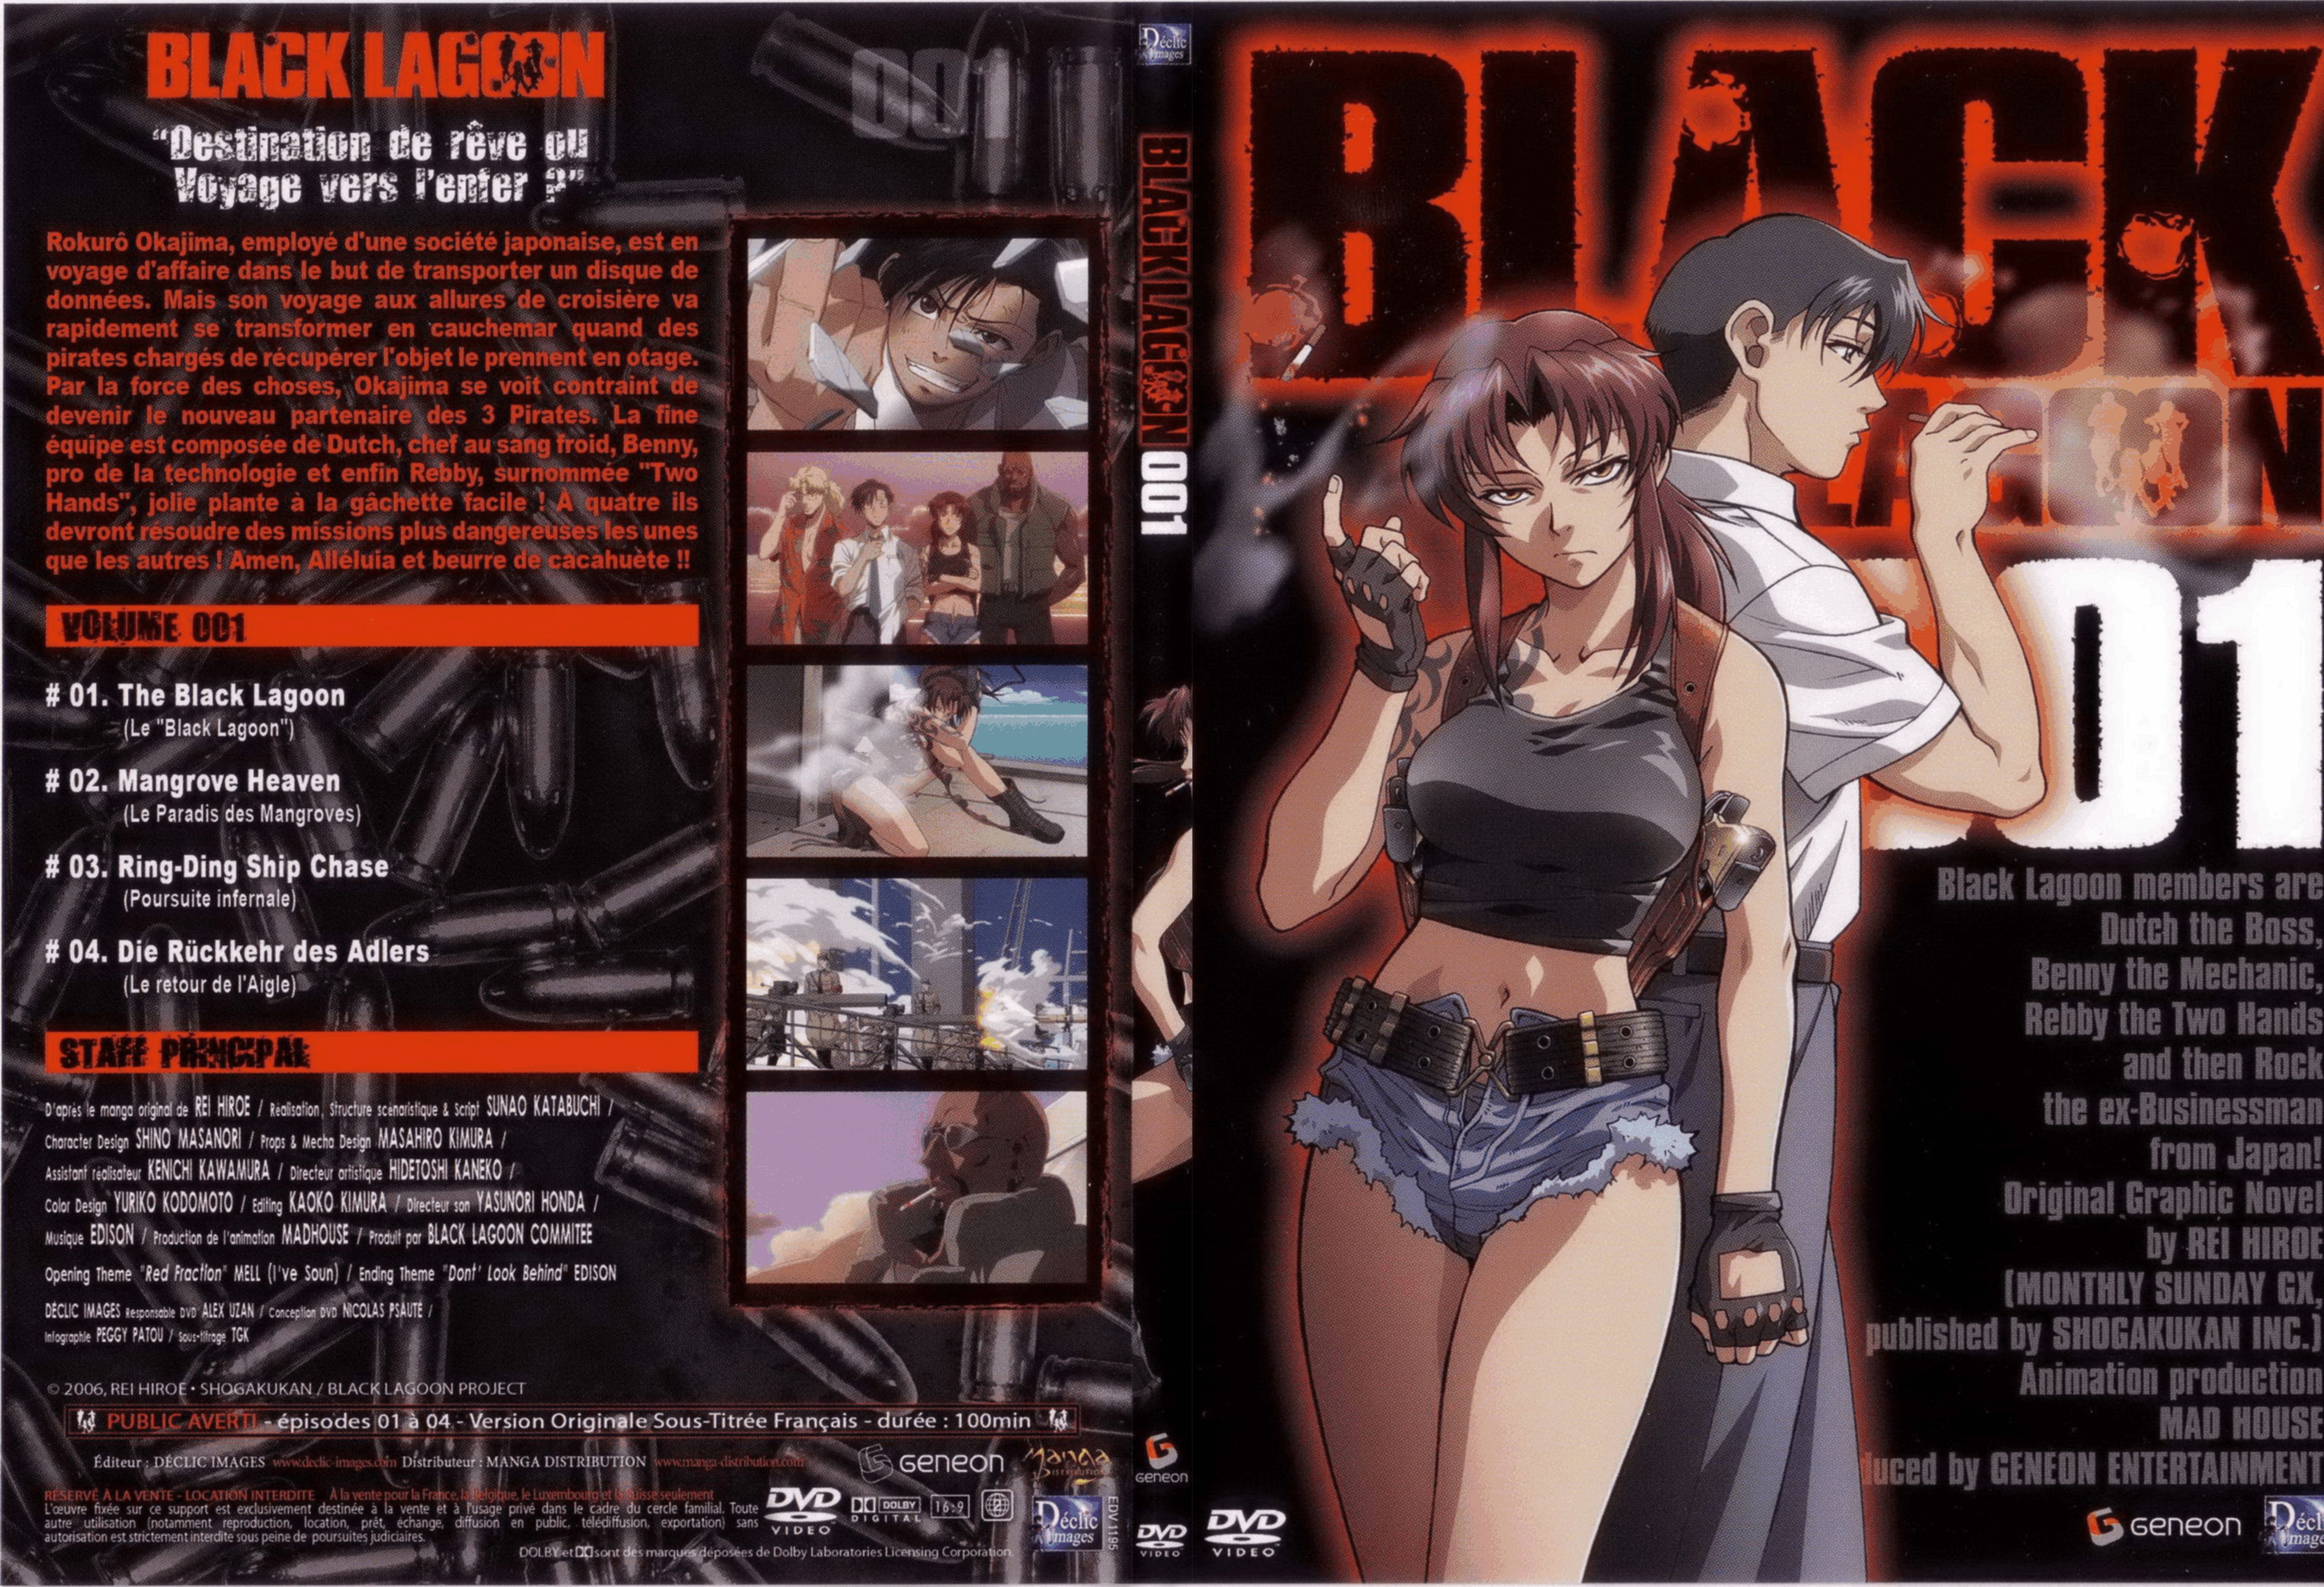 Jaquette DVD Black lagoon 001 - SLIM